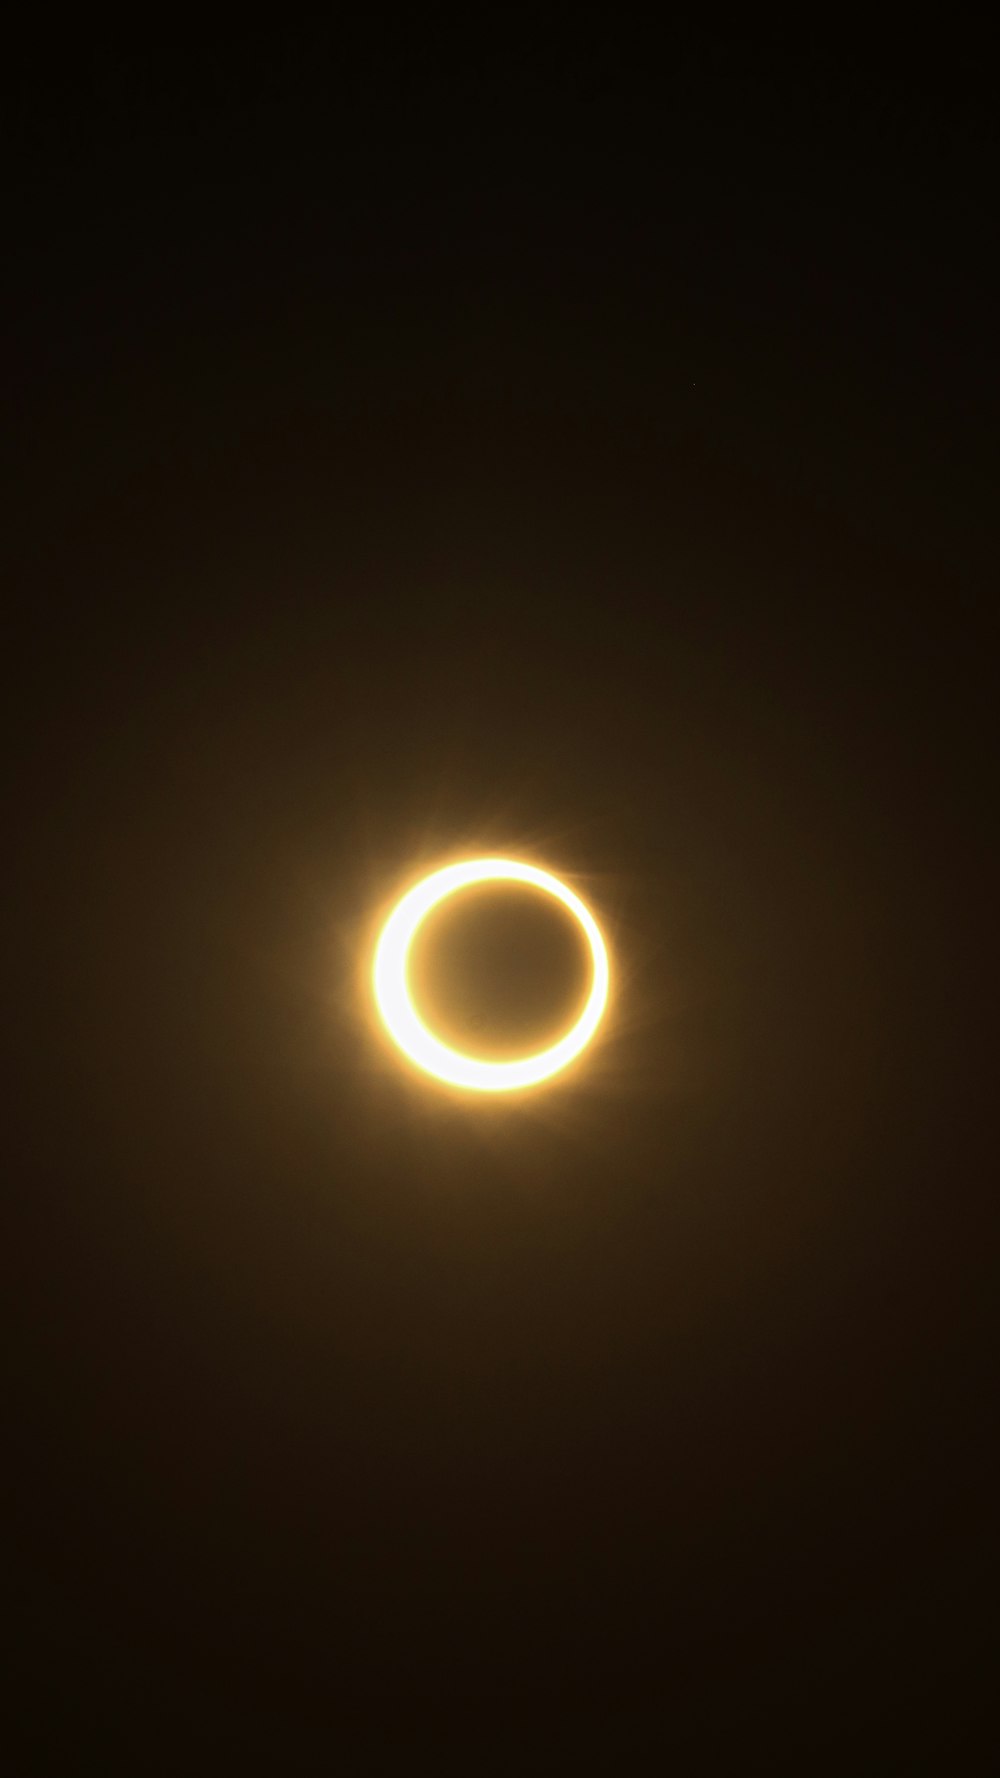 a ring of light in the dark sky